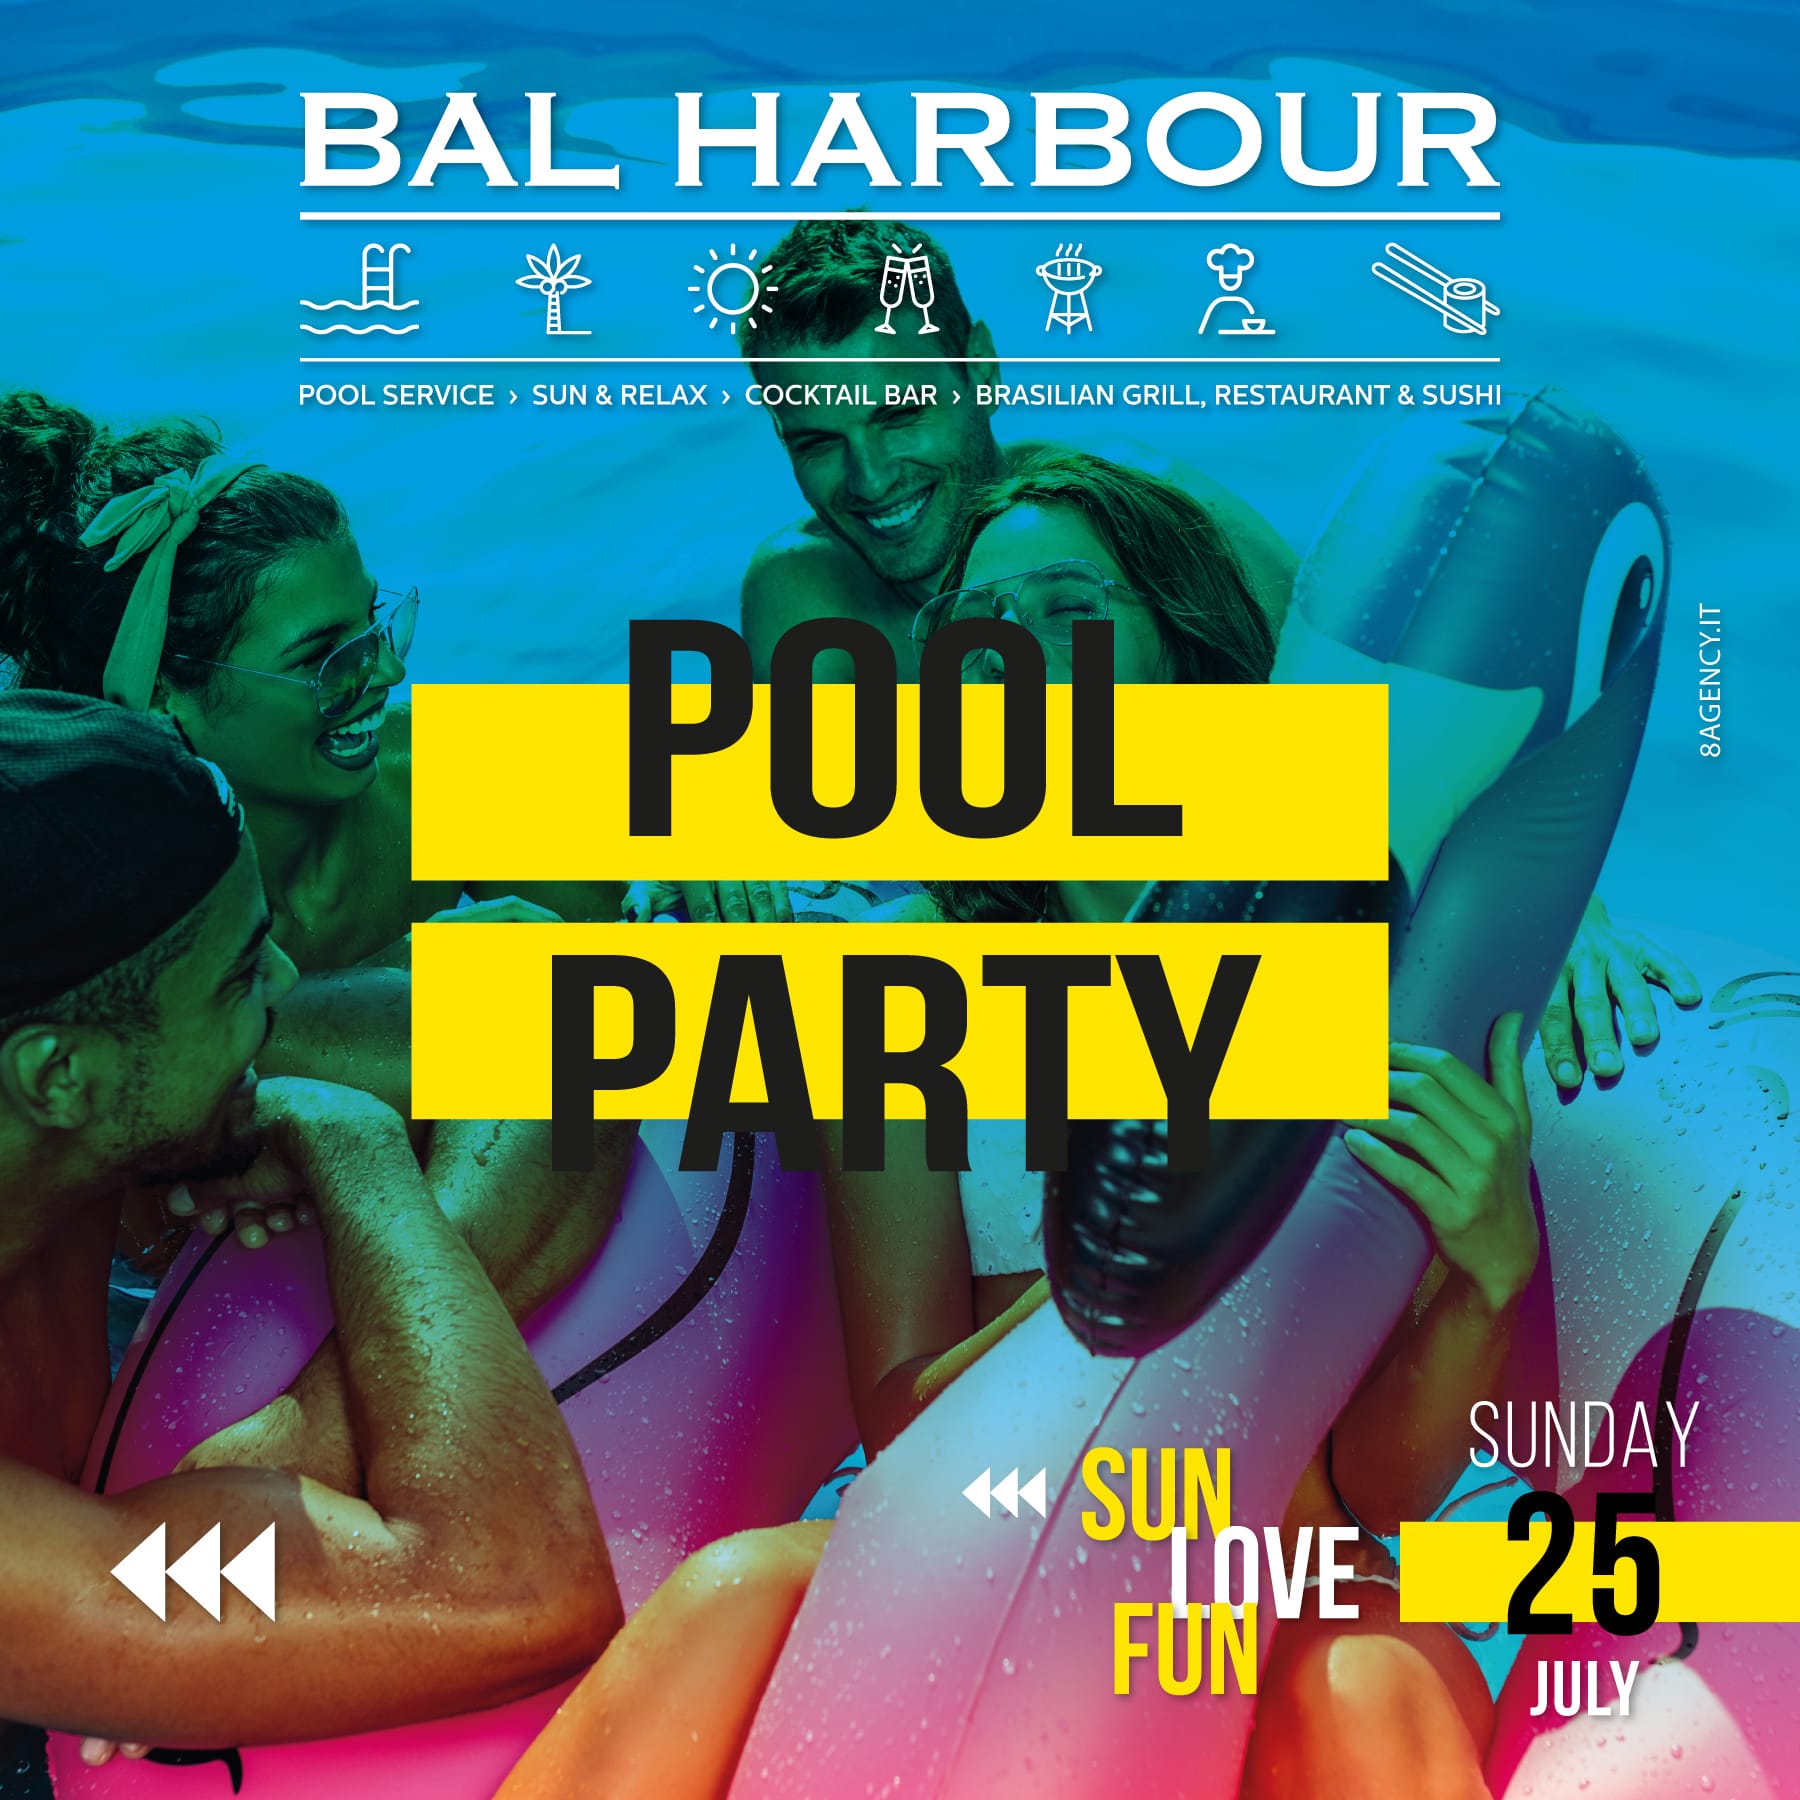 pool-party-domenica-25-luglio-San-Teodoro-Bal-Harbour